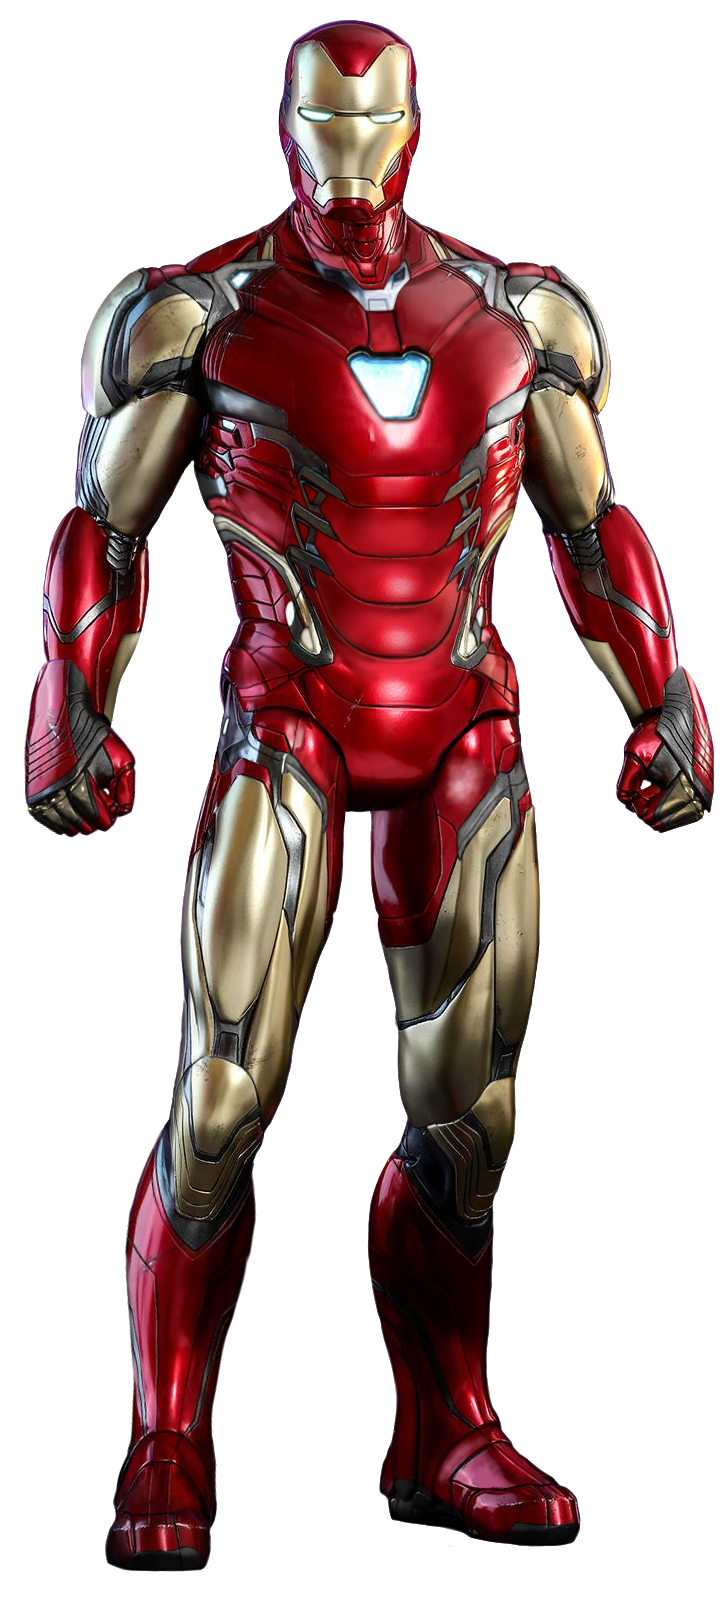 Download Flying Avengers Iron Man Free Photo HQ PNG Image | FreePNGImg